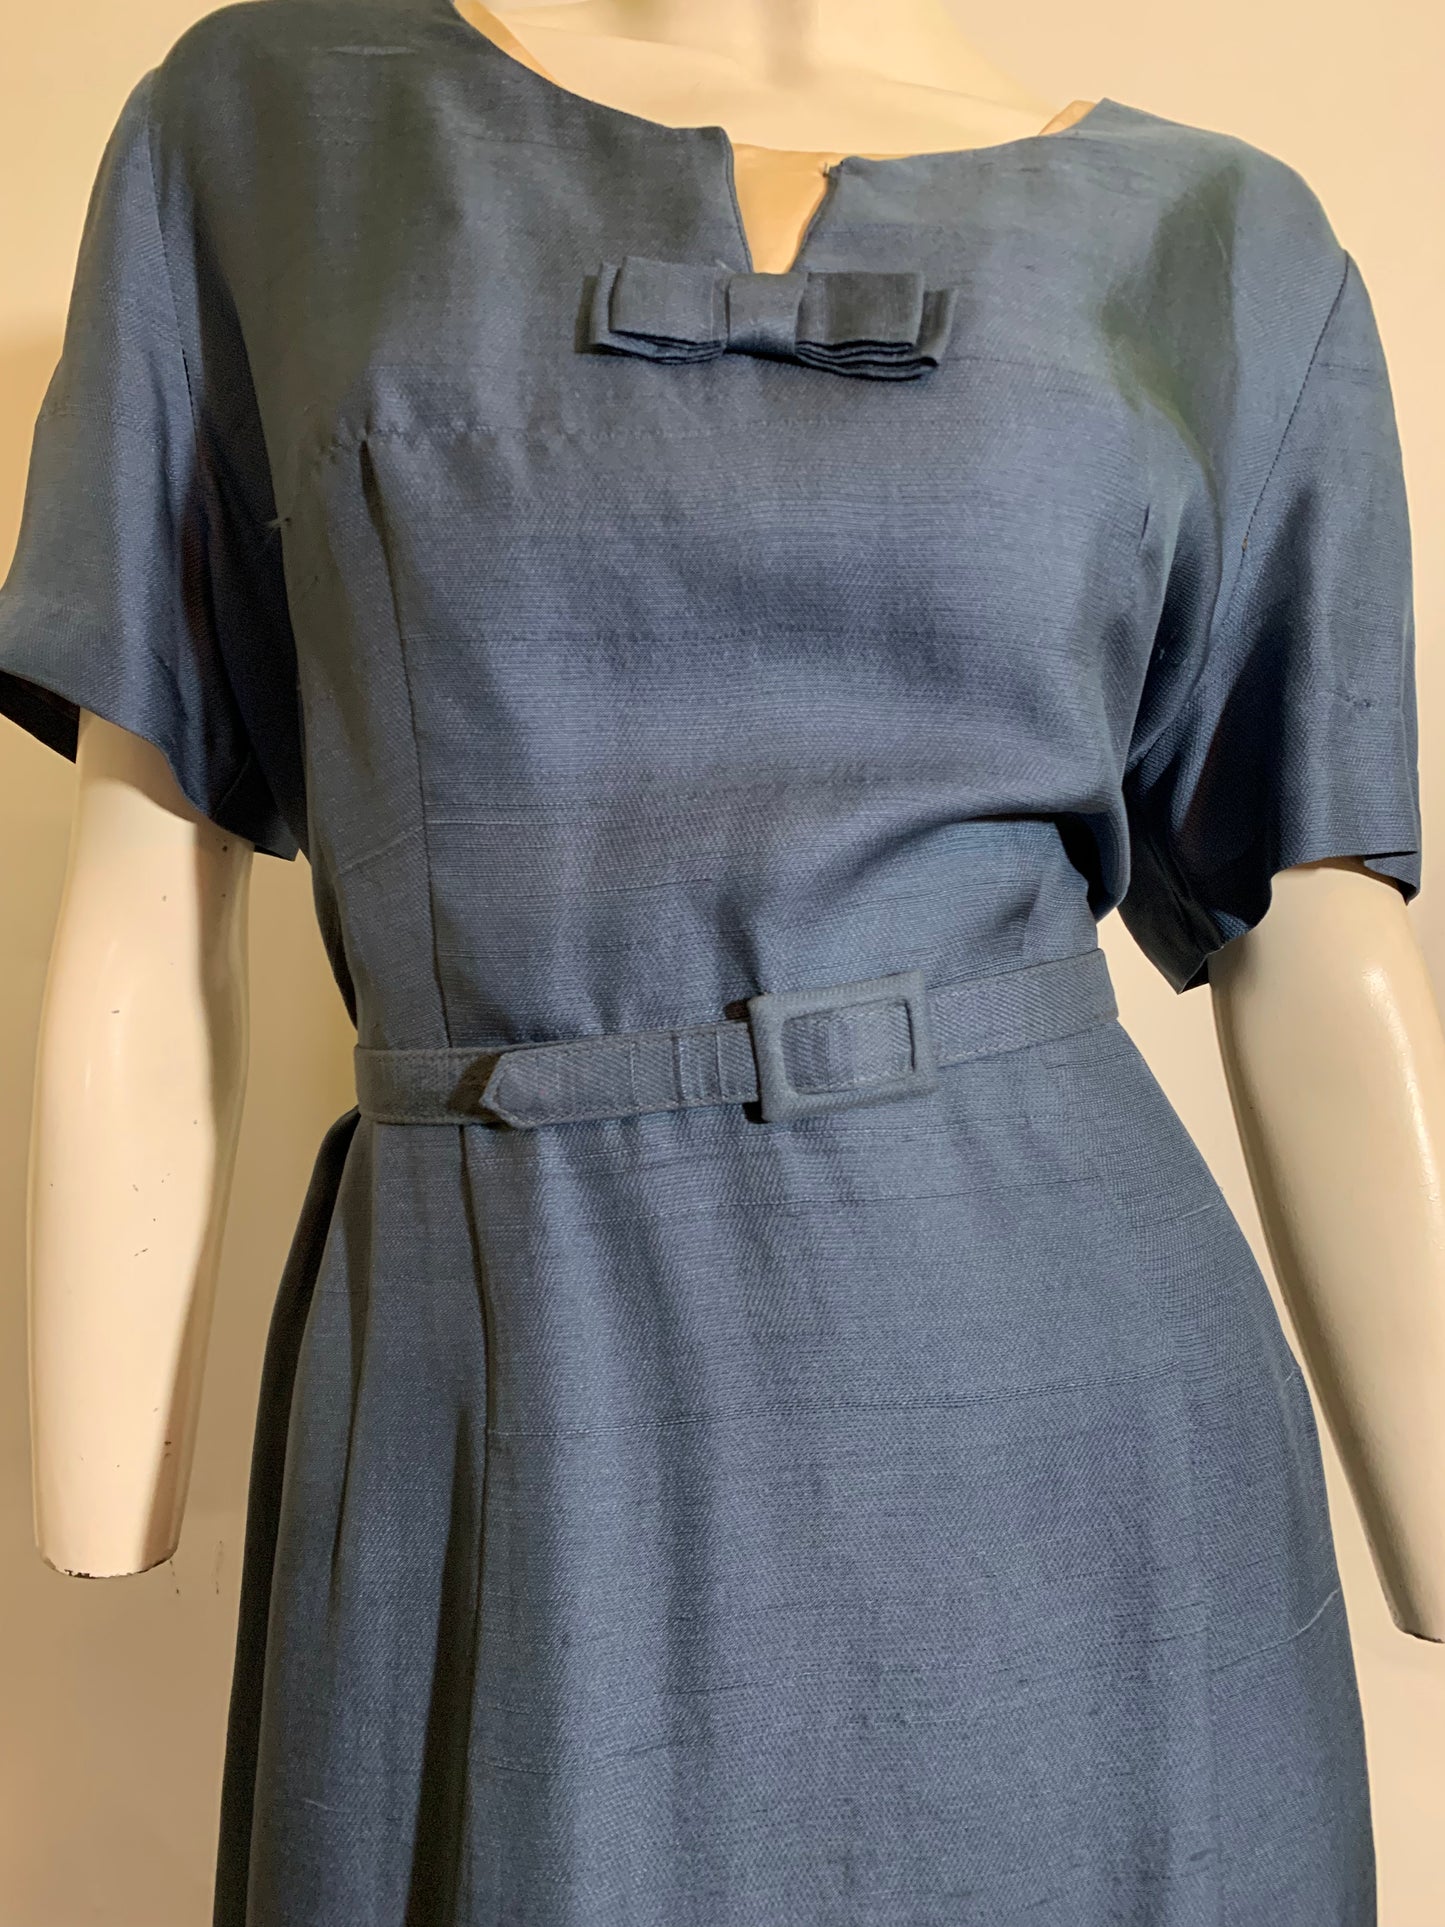 Dusky Blue Silk Day Dress circa 1960s